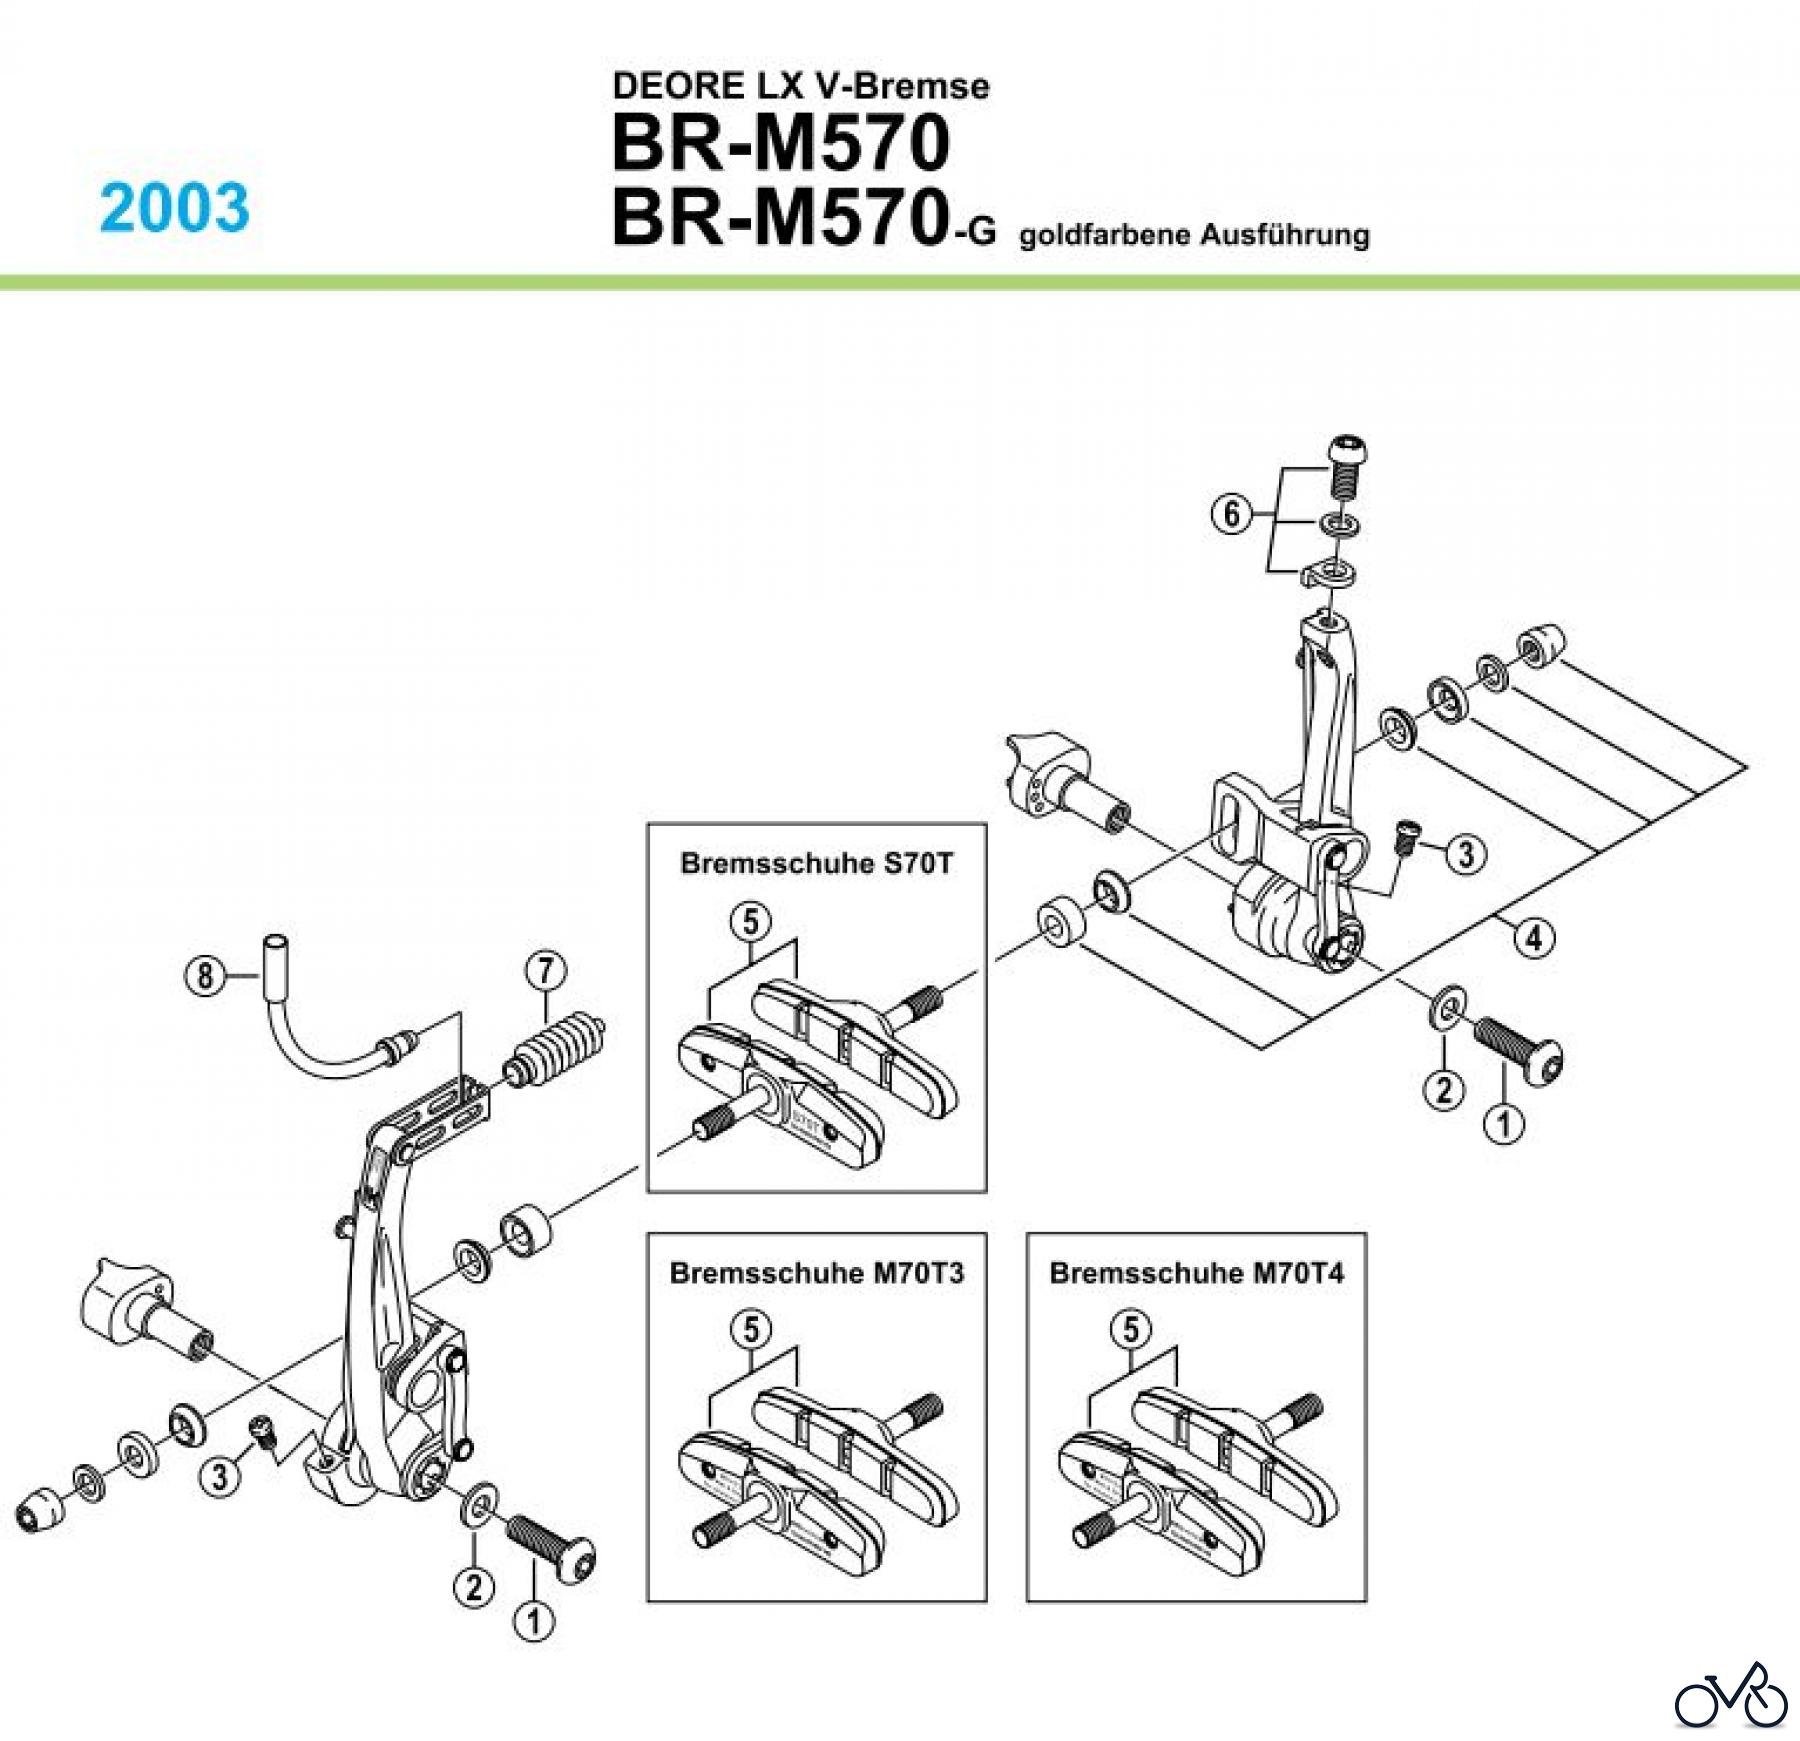  Shimano BR Brake - Bremse BR-M570 Deore LX V-Brake von 2003